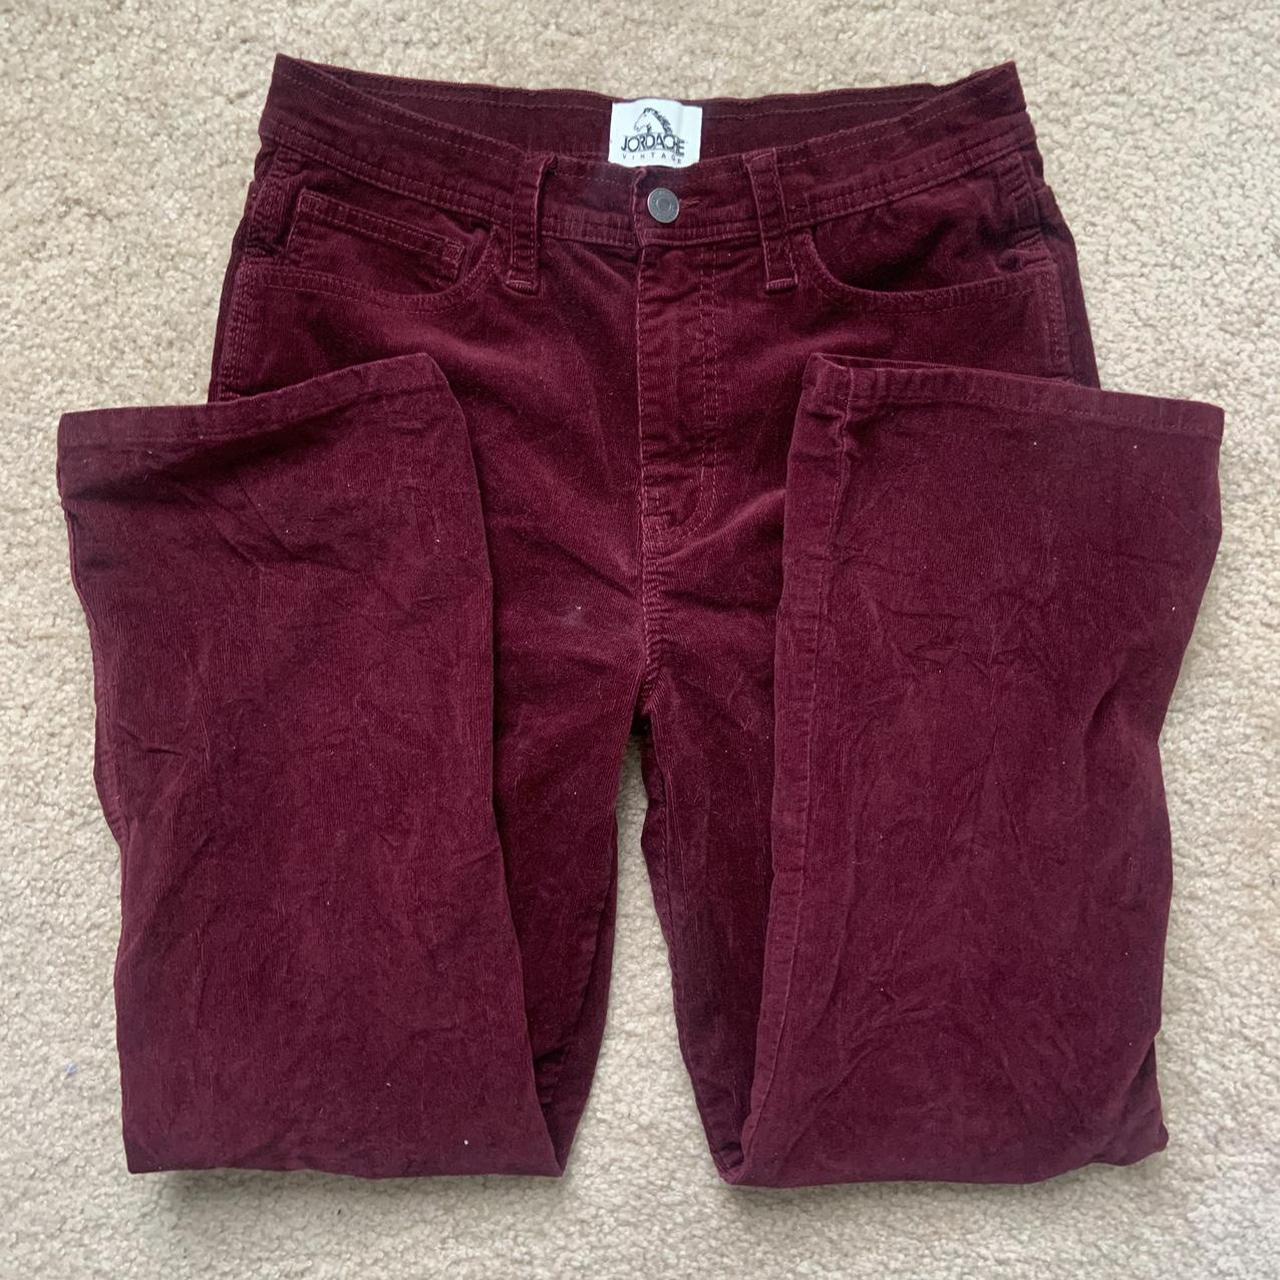 Hang Ten Jeanswear 100% Cotton Maroon Red Corduroy Pants Womens Size 7/8  NWT | eBay